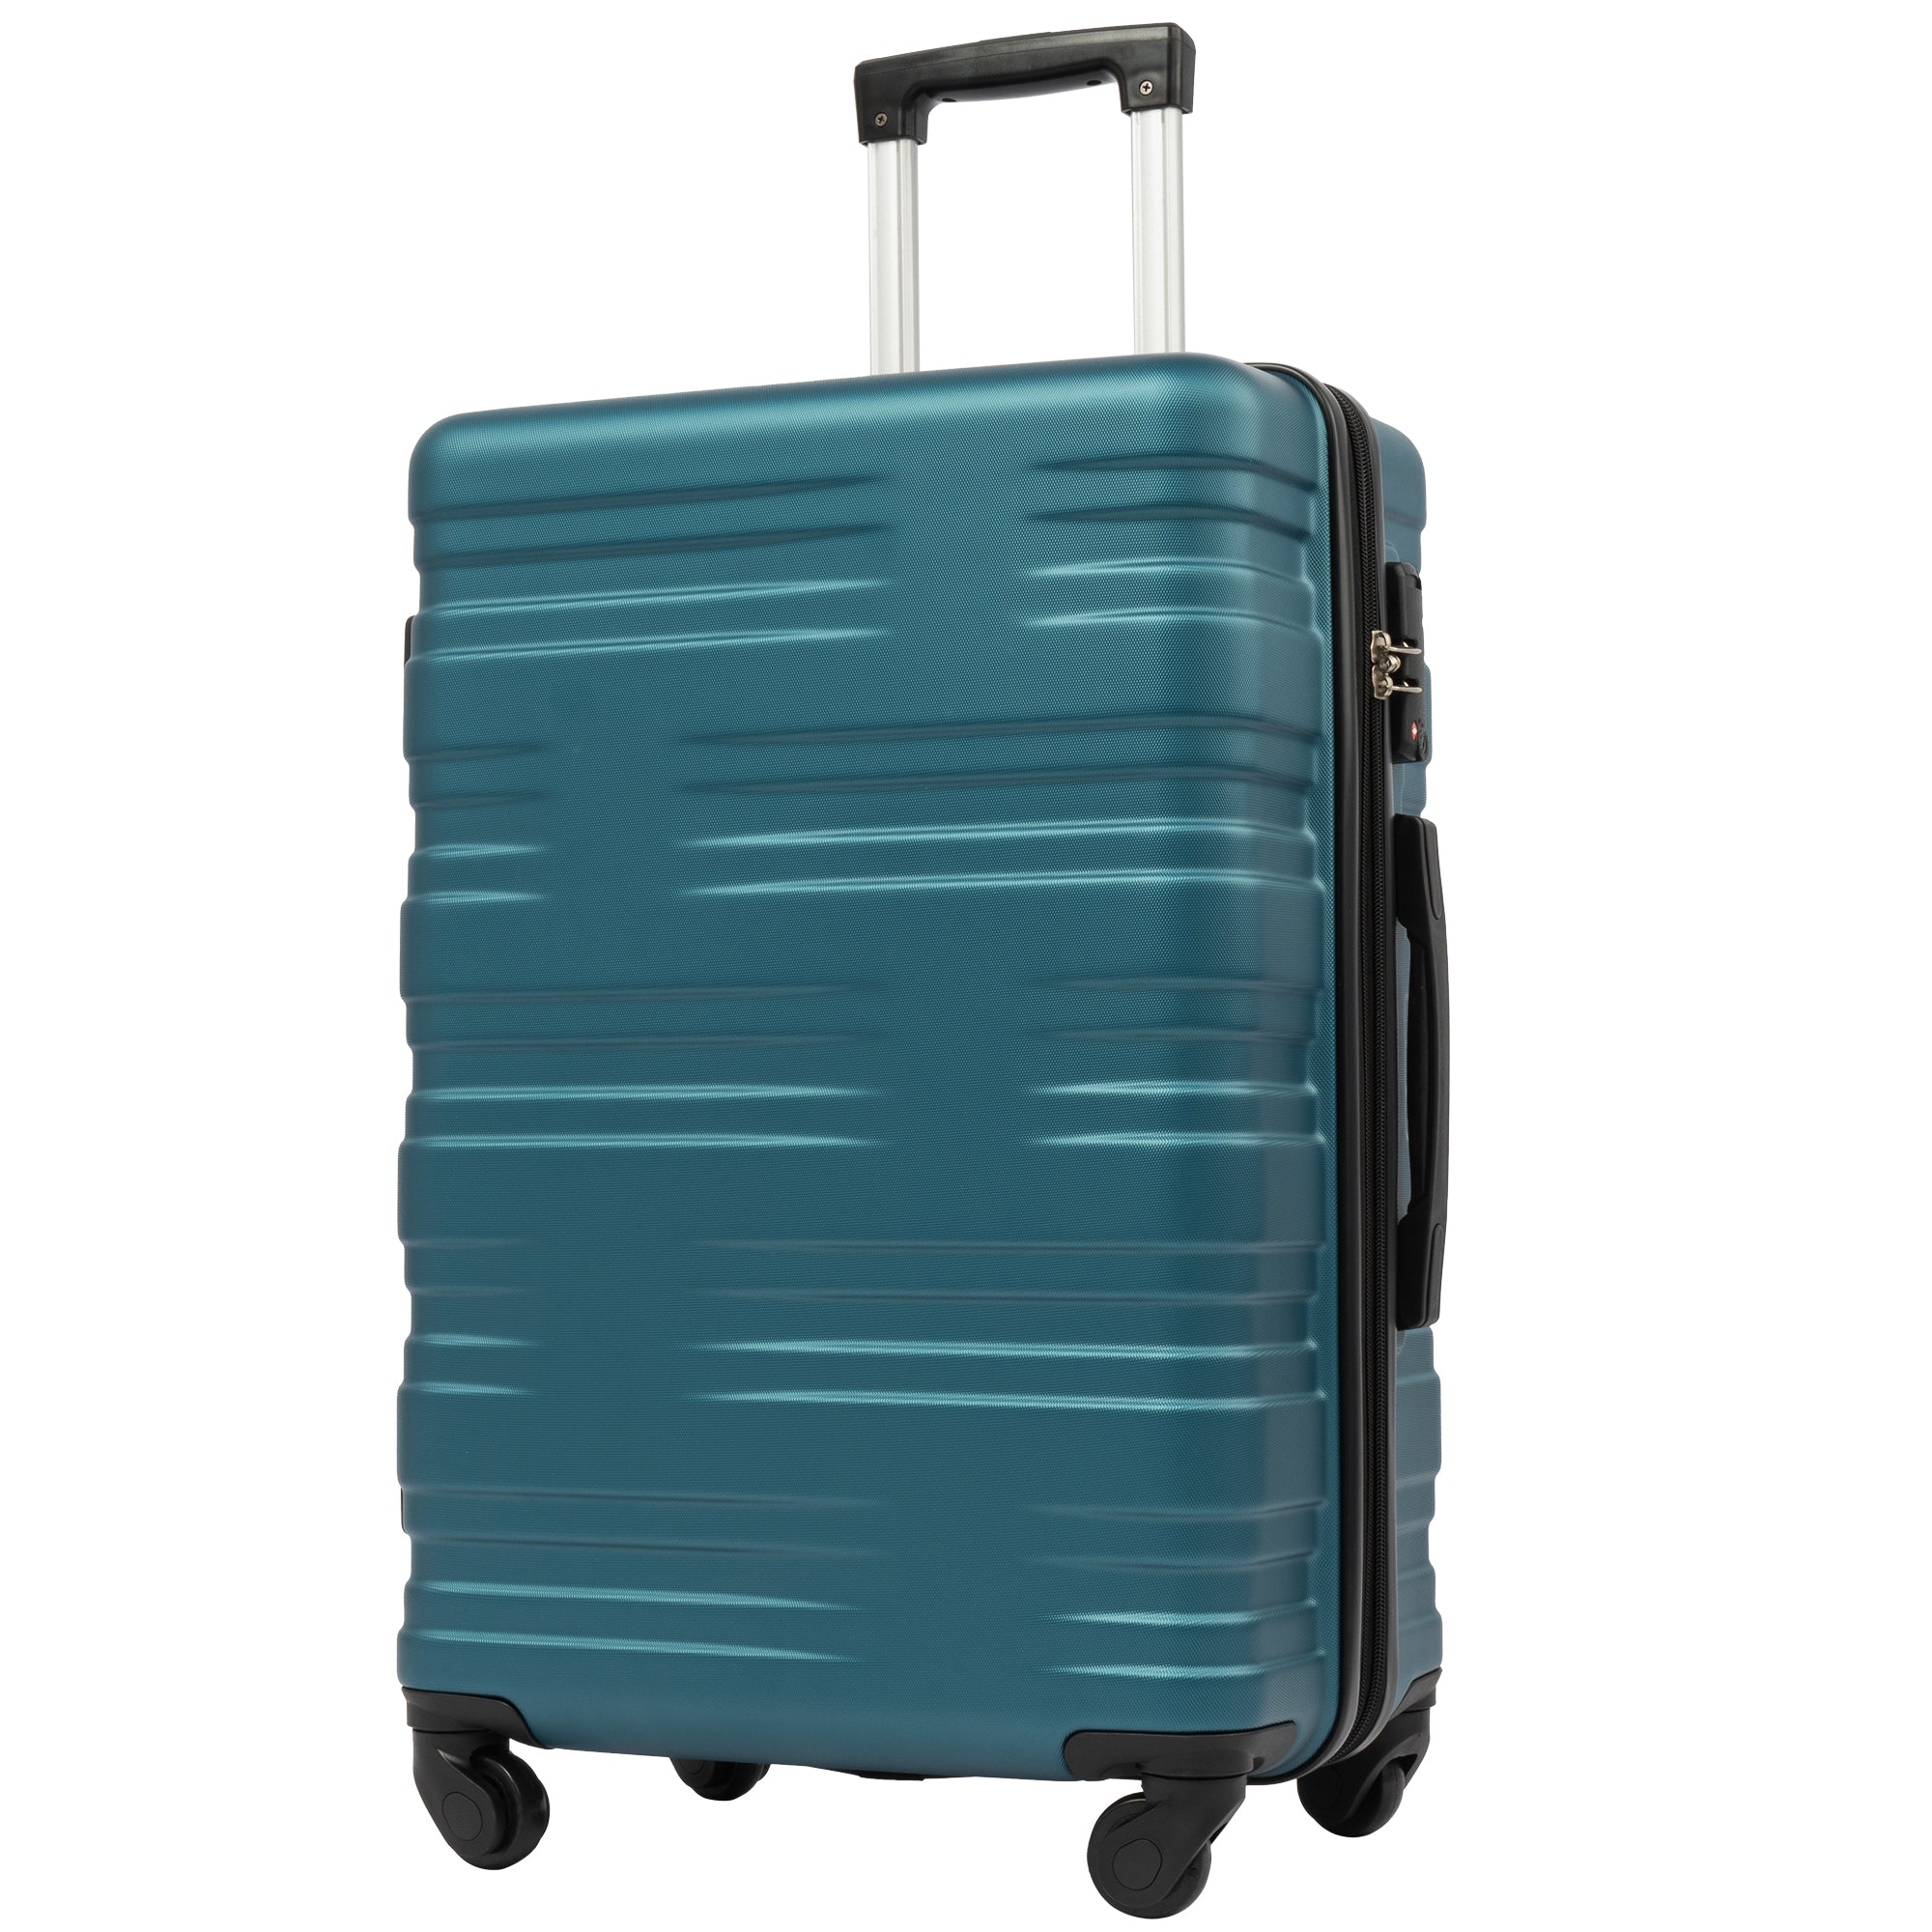 Merax Luggage with TSA Lock Spinner Wheels Hardside antique blue green-abs